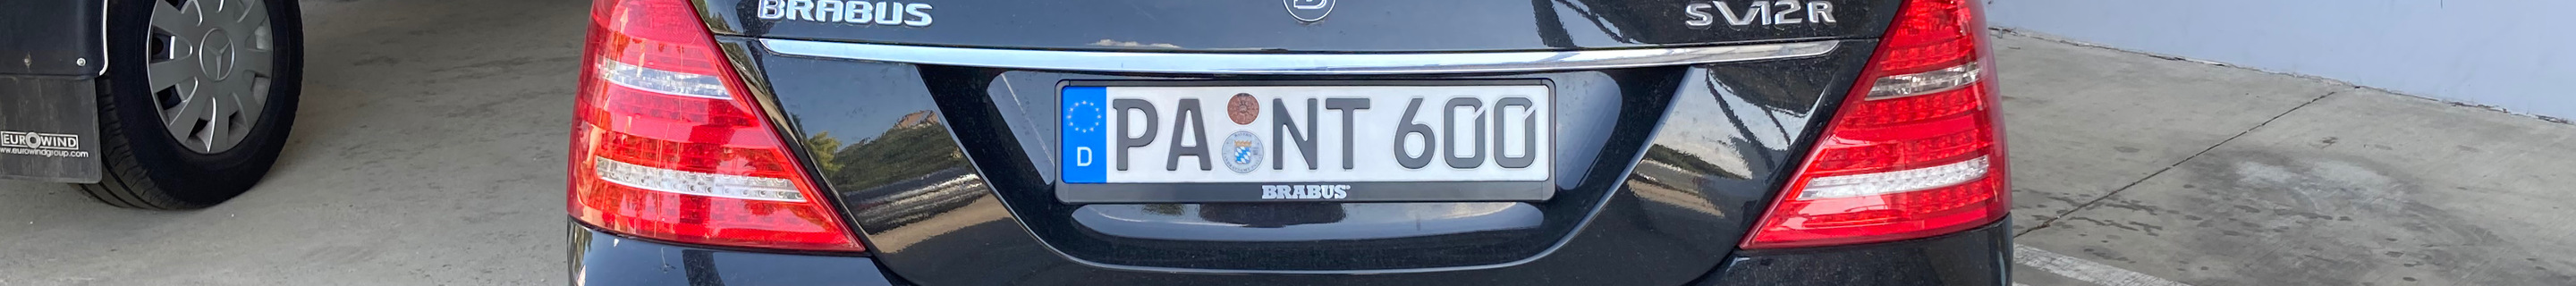 Mercedes-Benz Brabus S V12 R